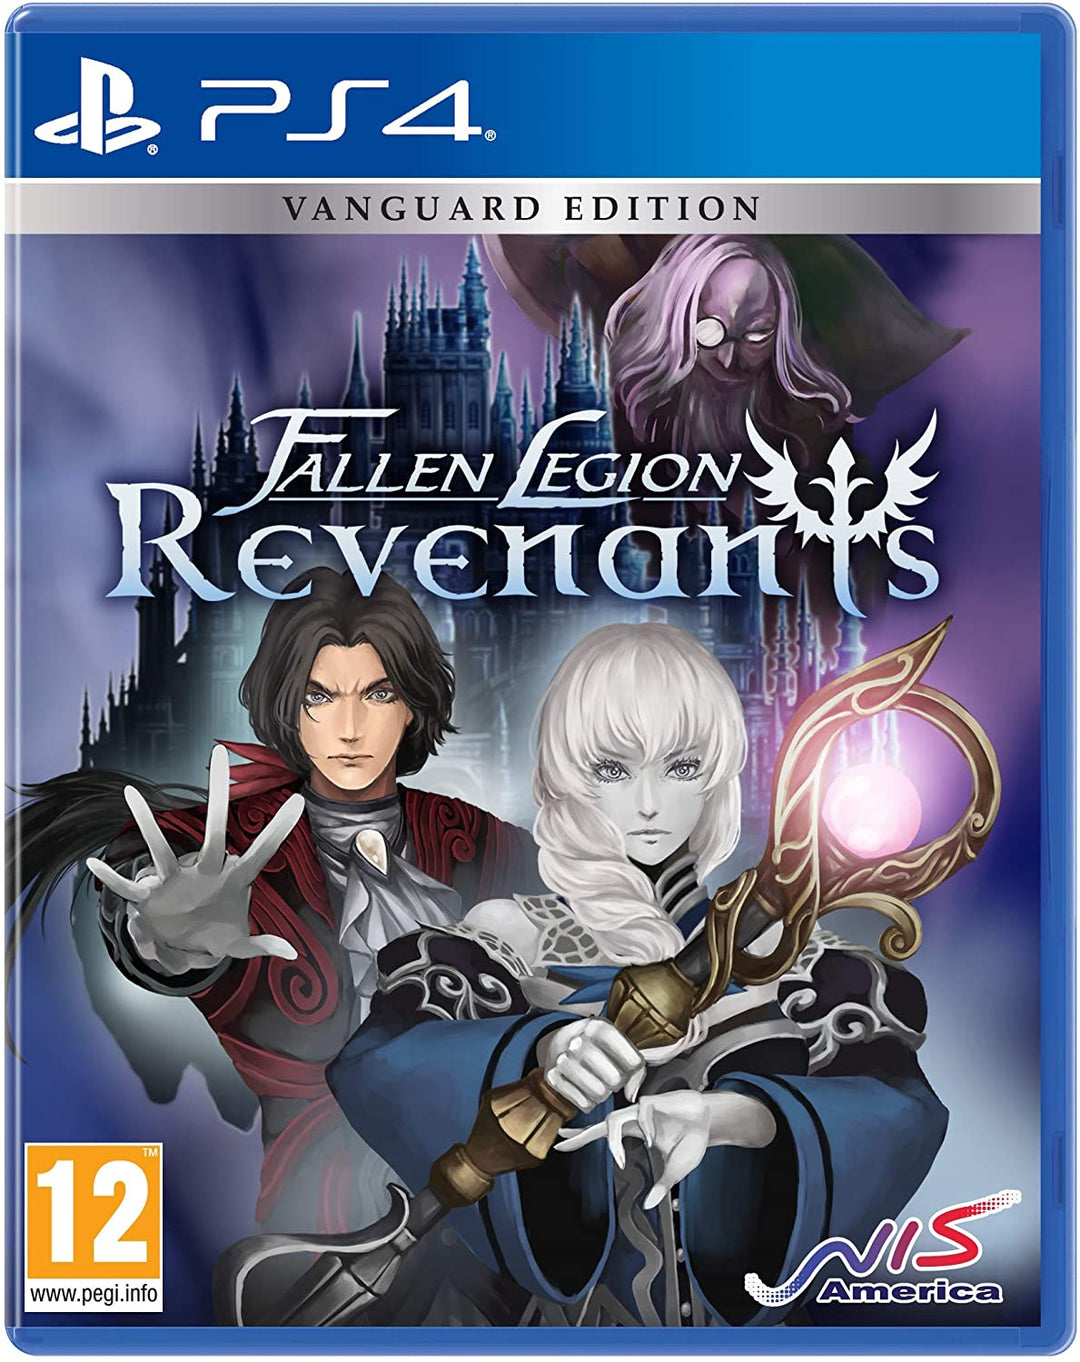 Fallen Legion Revenants Vanguard Edition - PlayStation 4 (PS4)